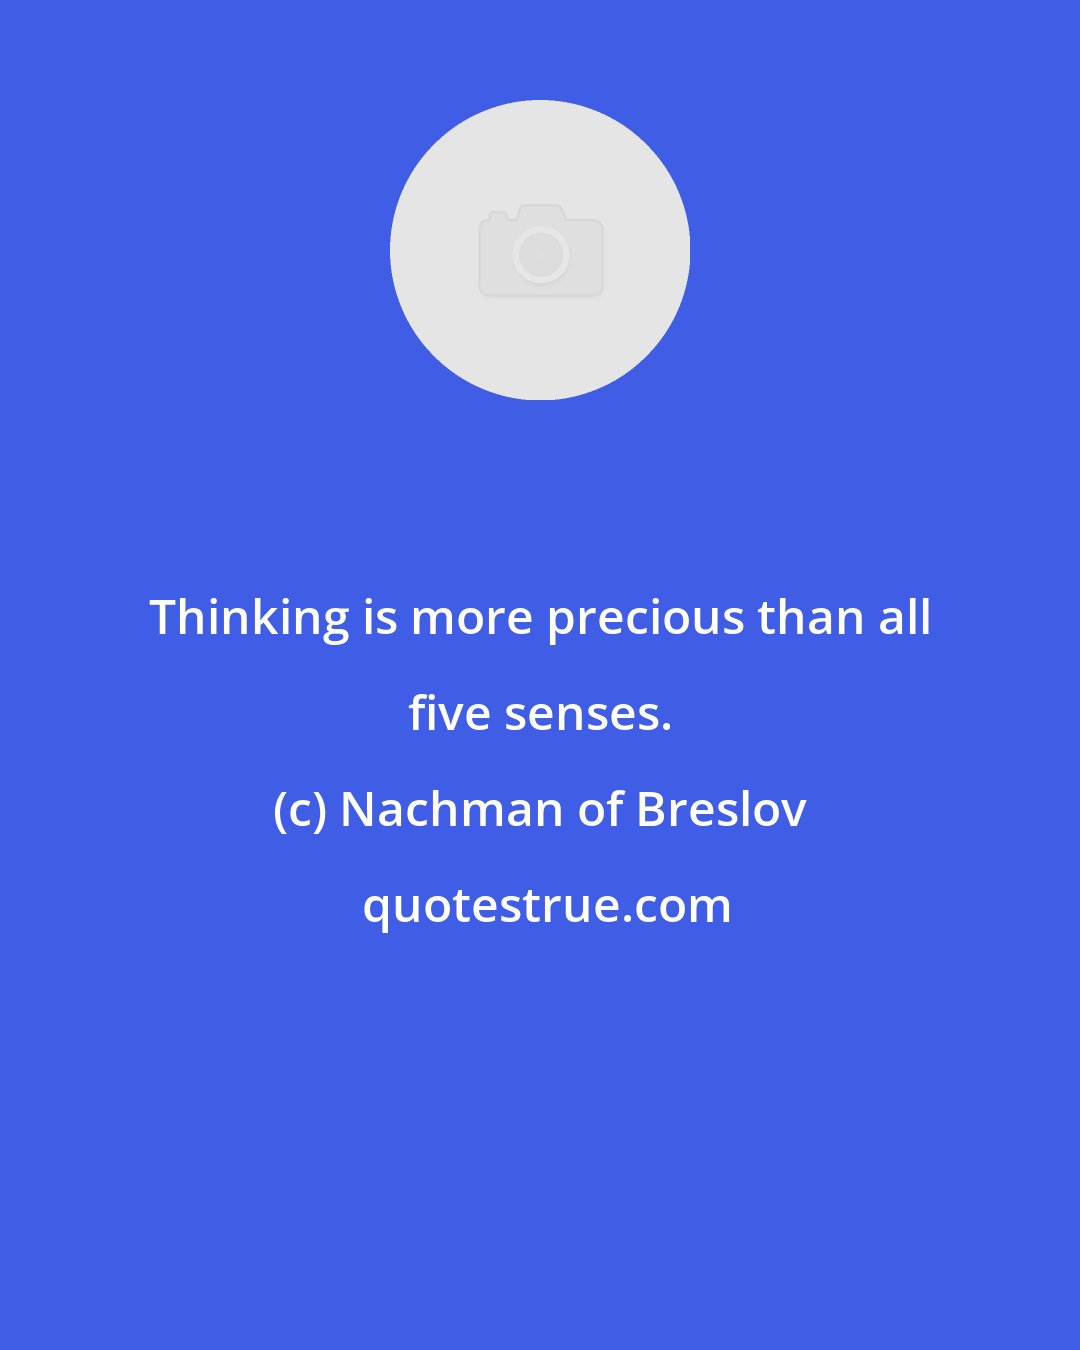 Nachman of Breslov: Thinking is more precious than all five senses.